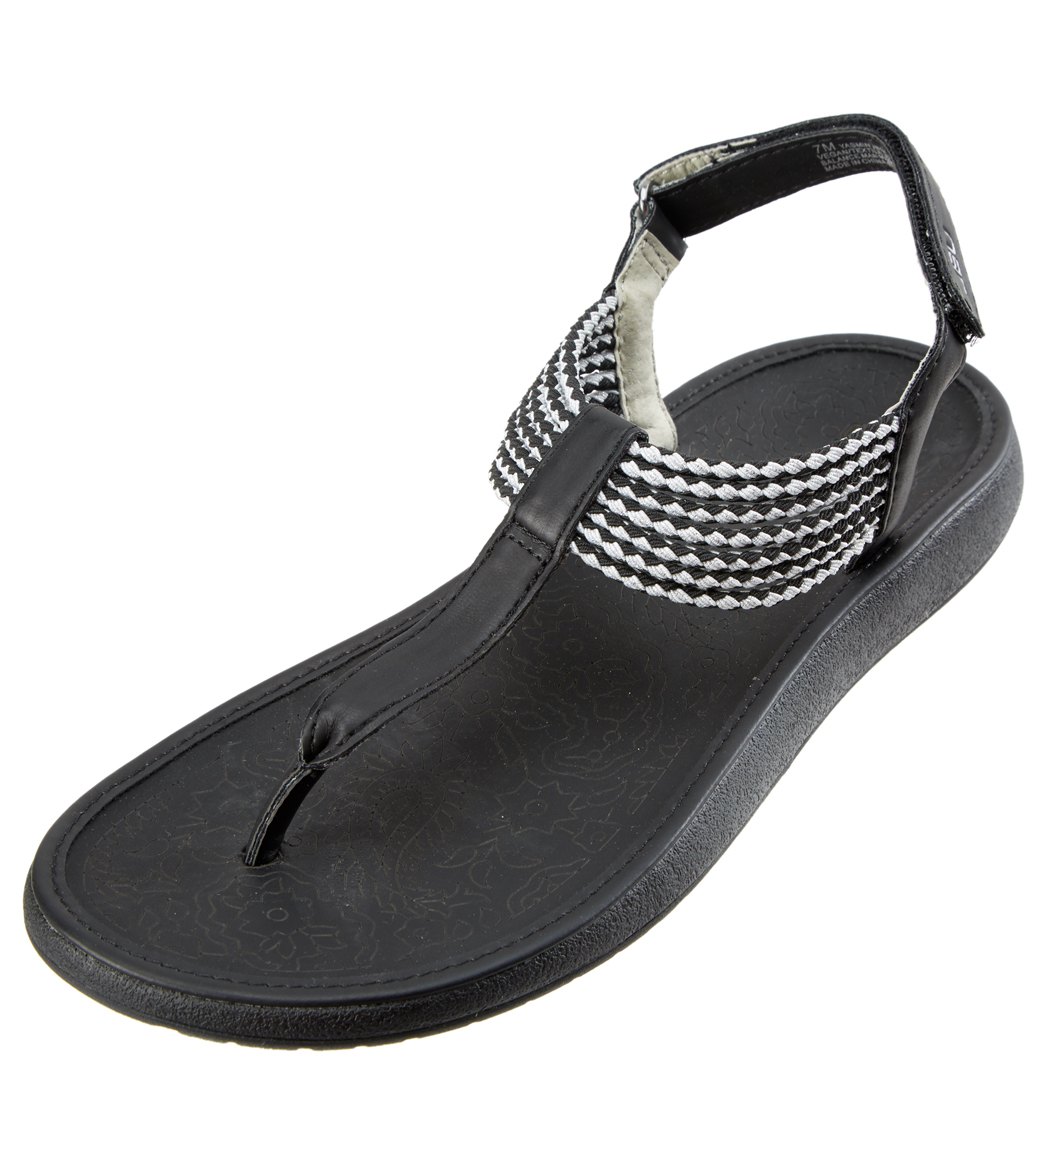 Jambu Women's Yasmin Sandals - Black/Silver 6 100% Rubber - Swimoutlet.com